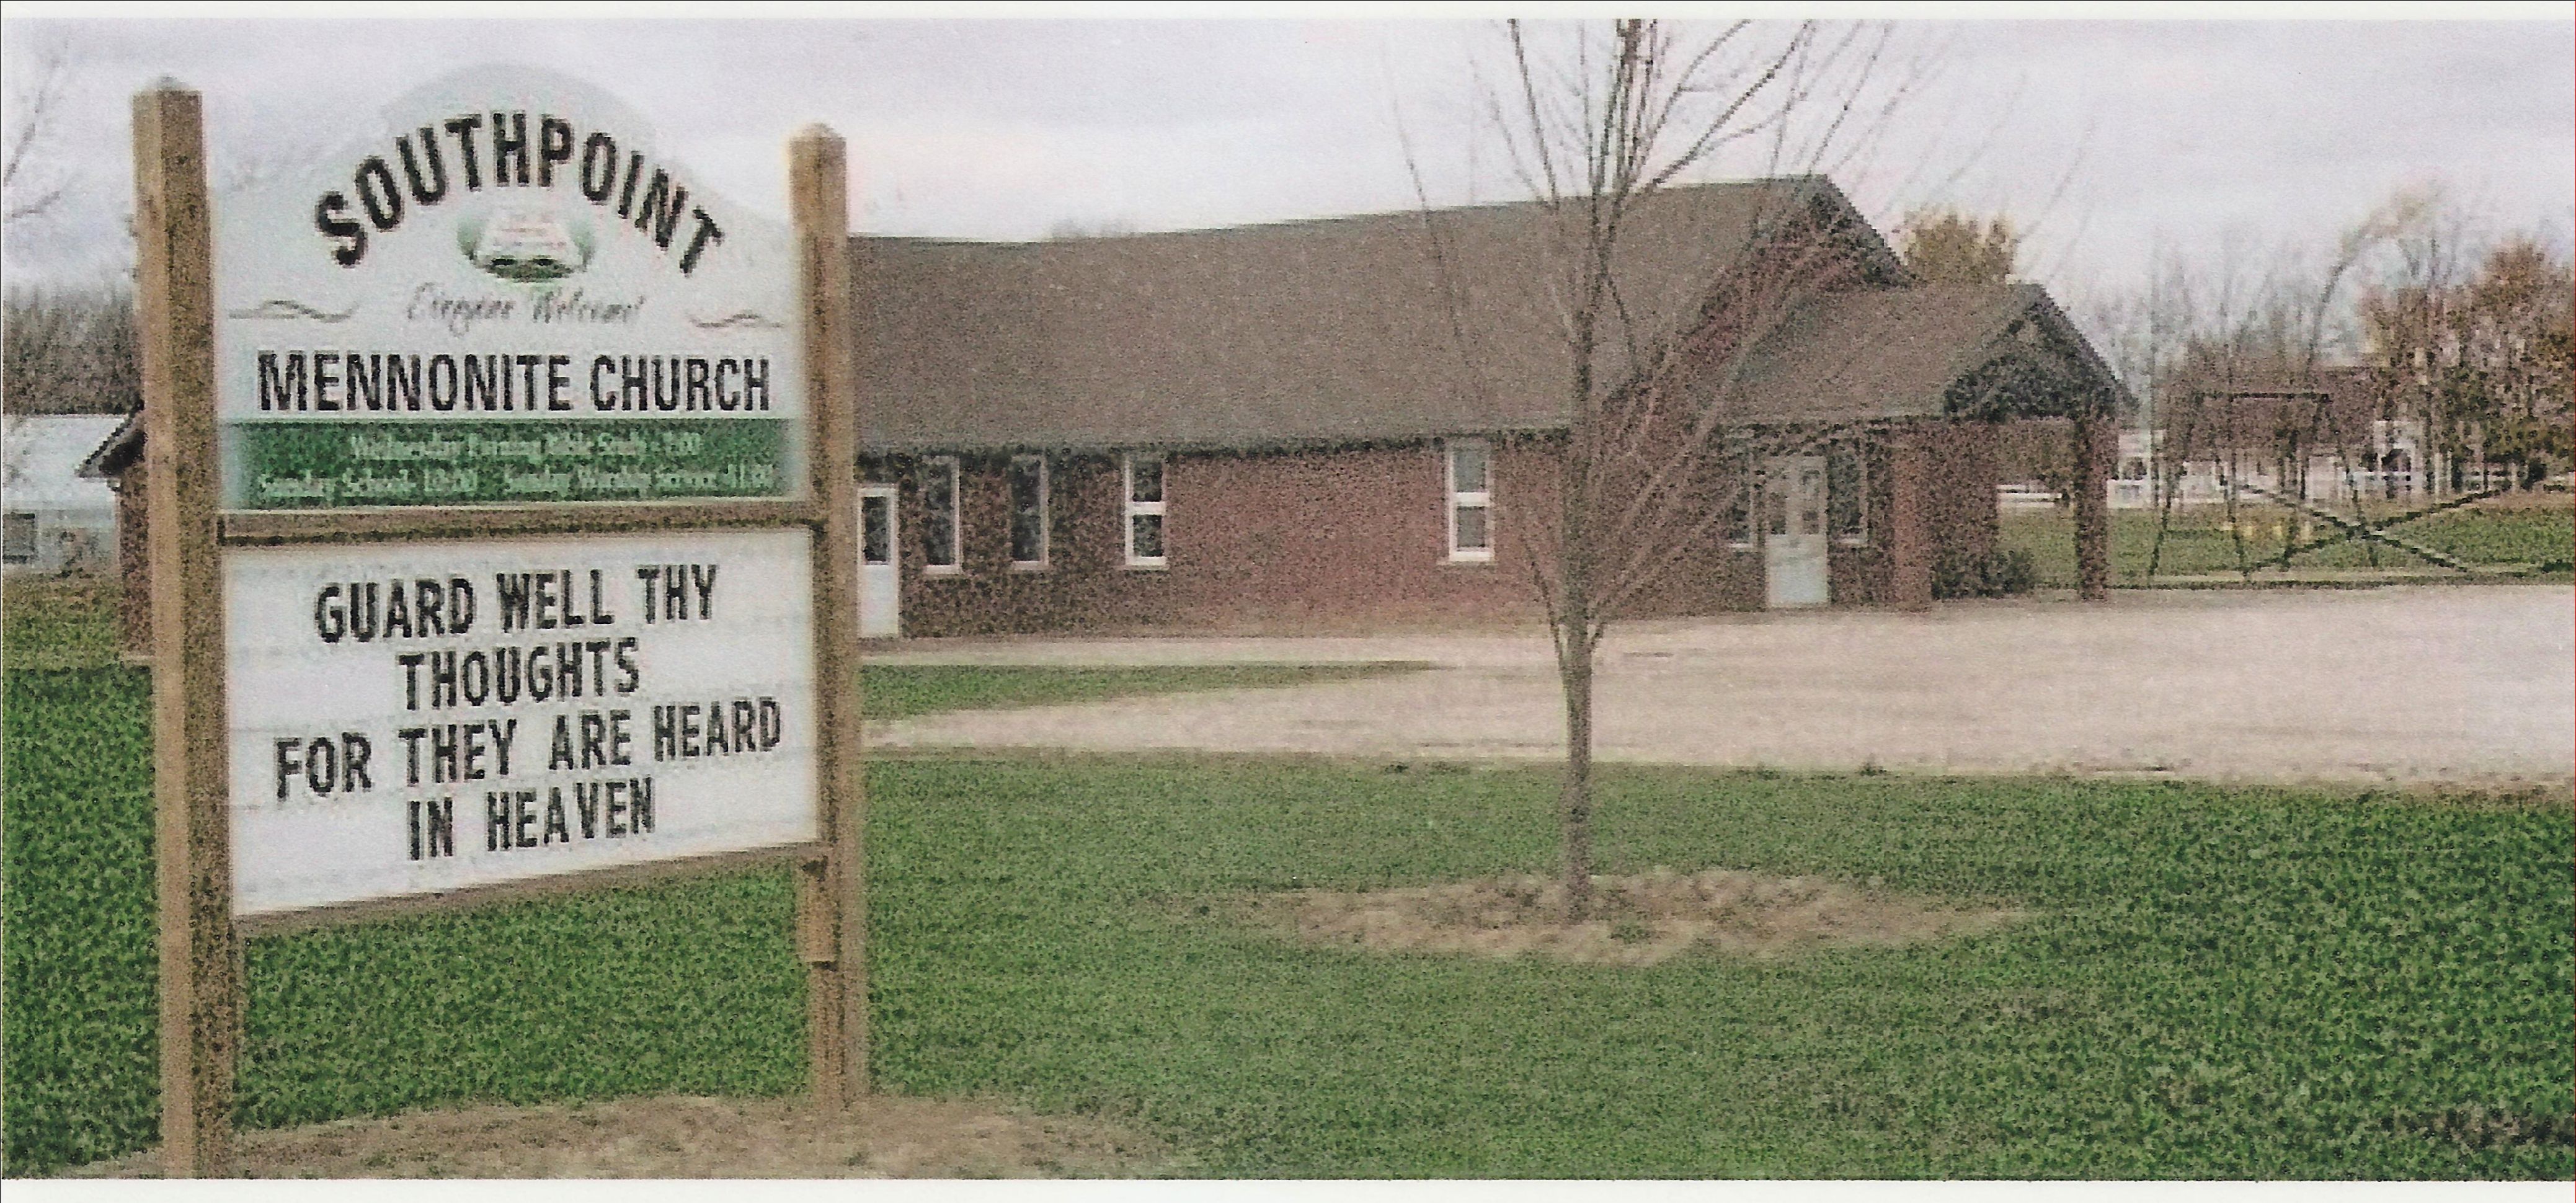 South Point Mennonite Church